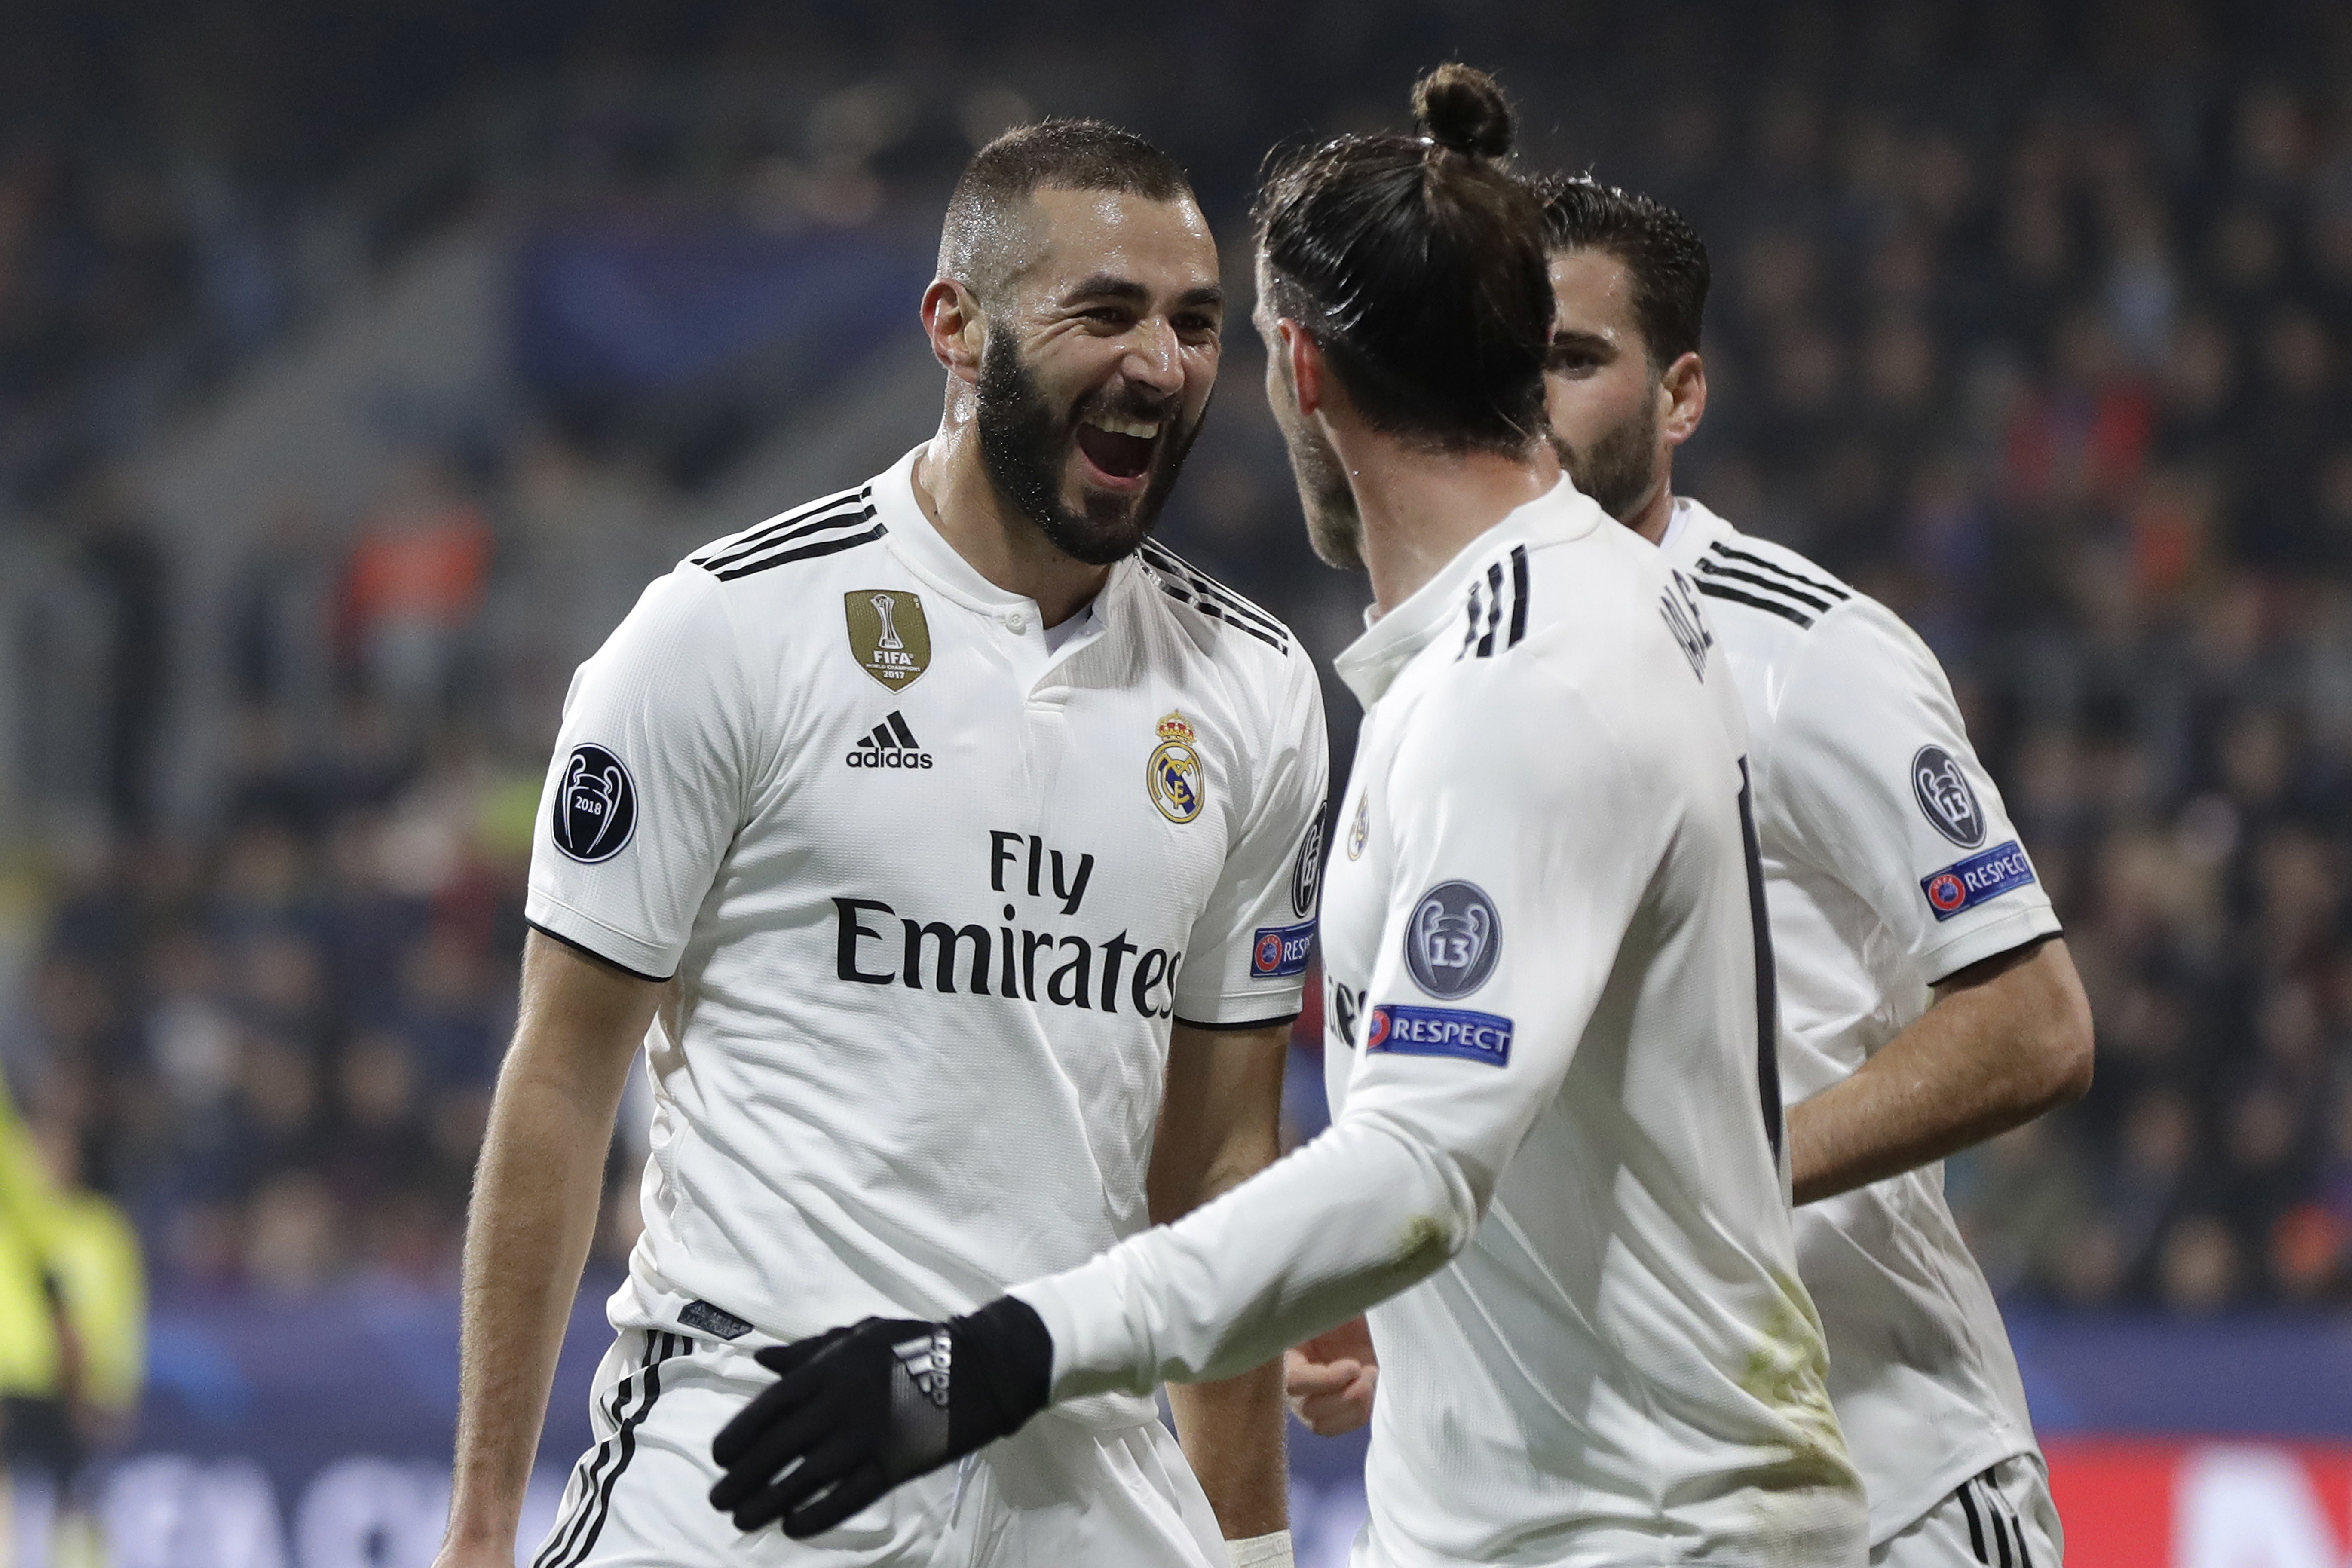 Madrid routs Plzen, keeps thriving under coach Solari